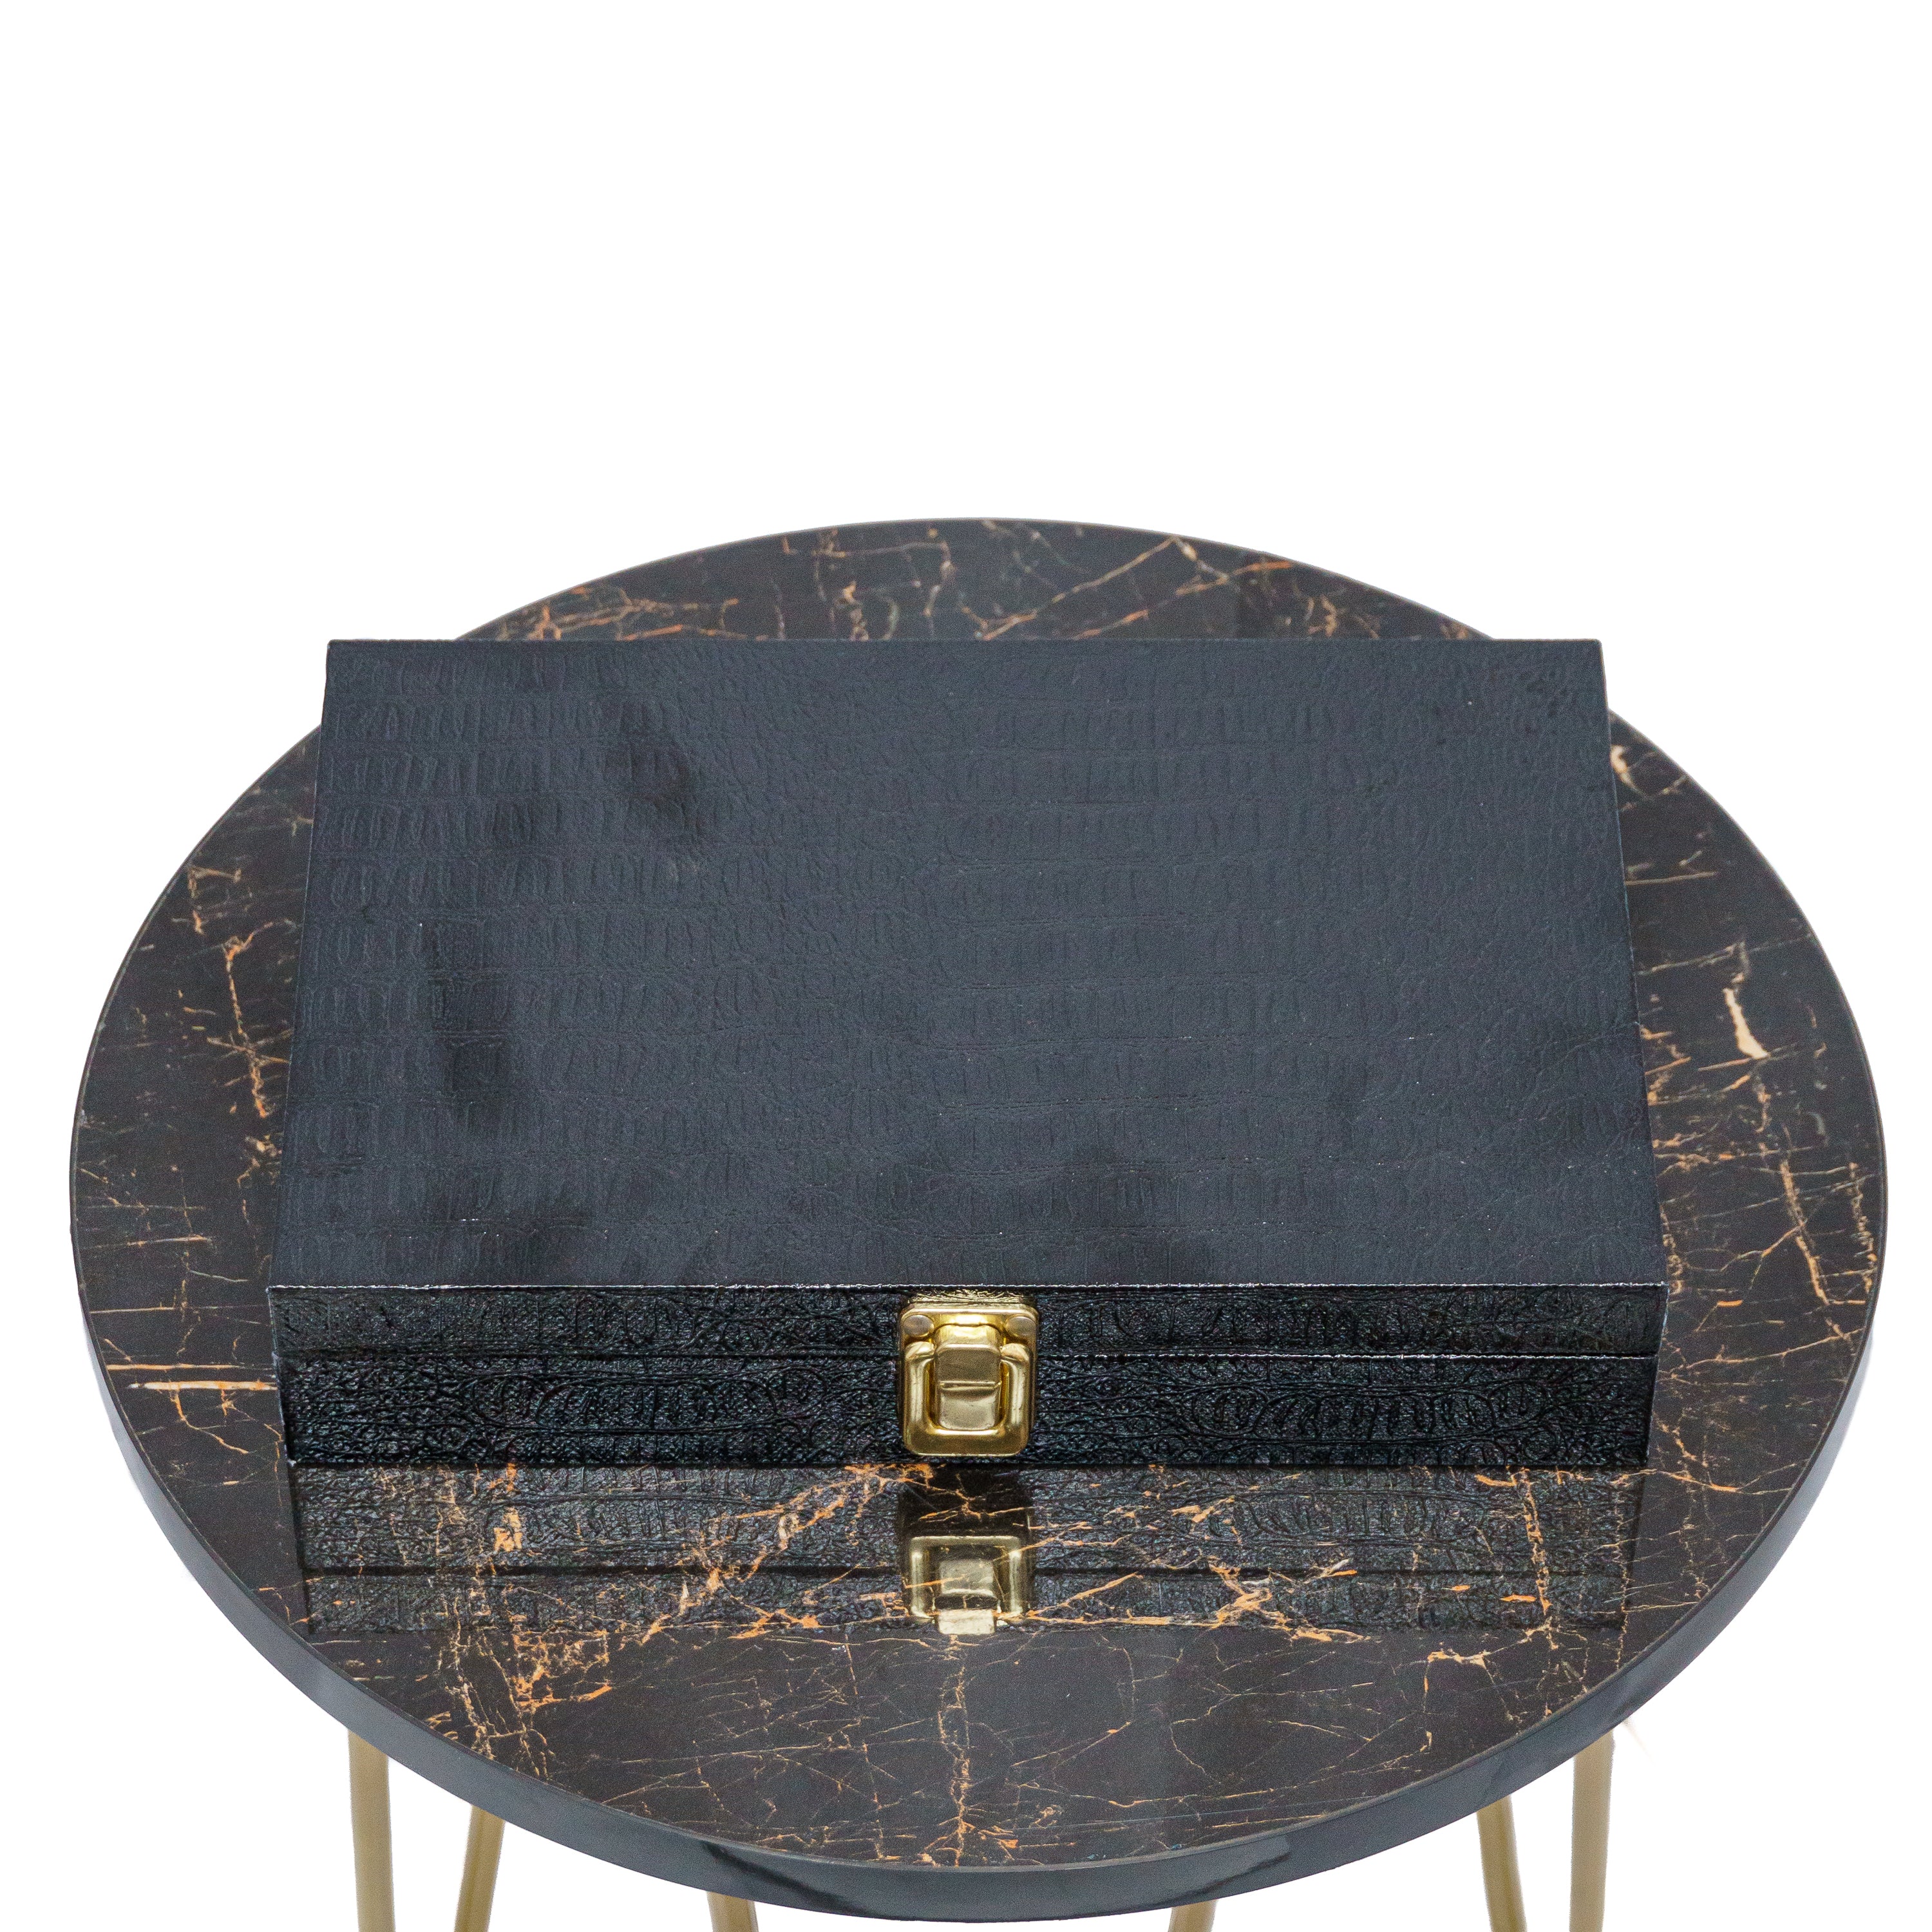 Golden Elegance Unveiled: Opulent Spoon and Fork Set in Sleek Black Box